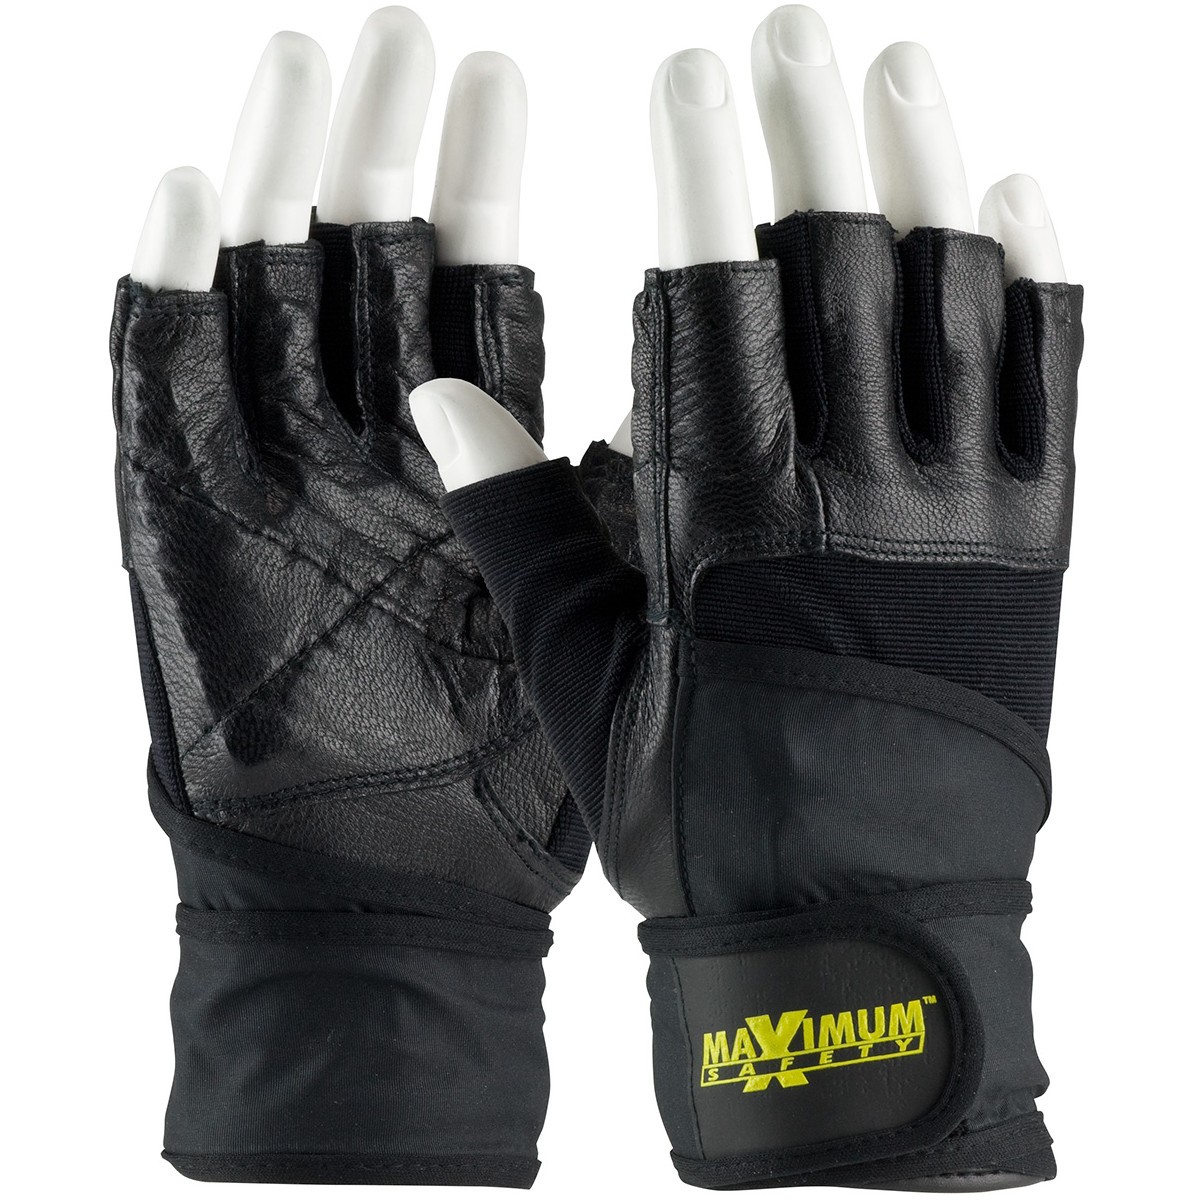 PIP 18-570/M MaxiCut Seamless Knit Engineered Yarn Glove with Nitrile Coated Microfoam Grip on Palm & Fingers - Medium